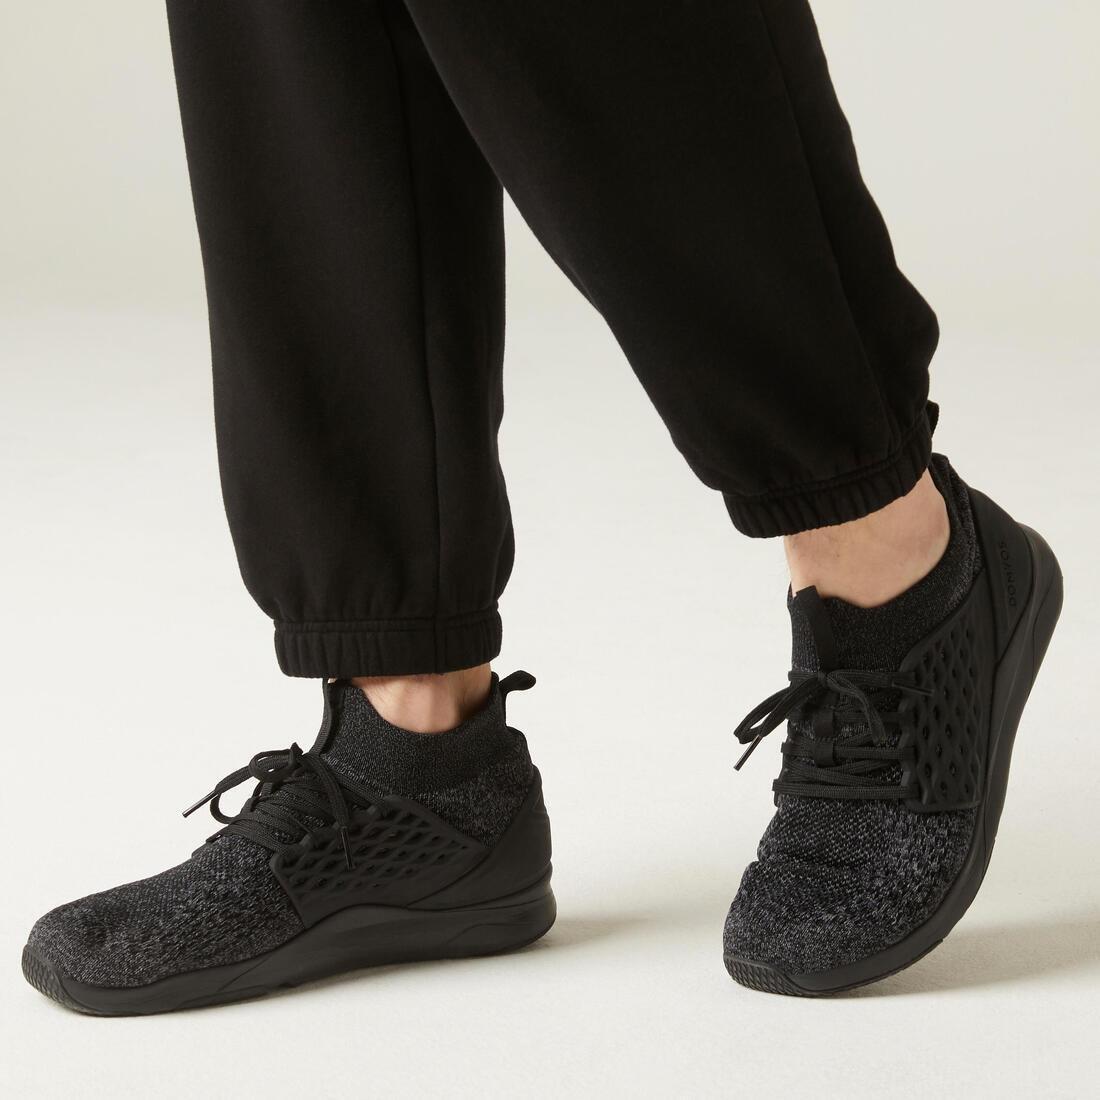 DOMYOS - Fitness Fleece Jogging Bottoms With Zip Pockets, Black